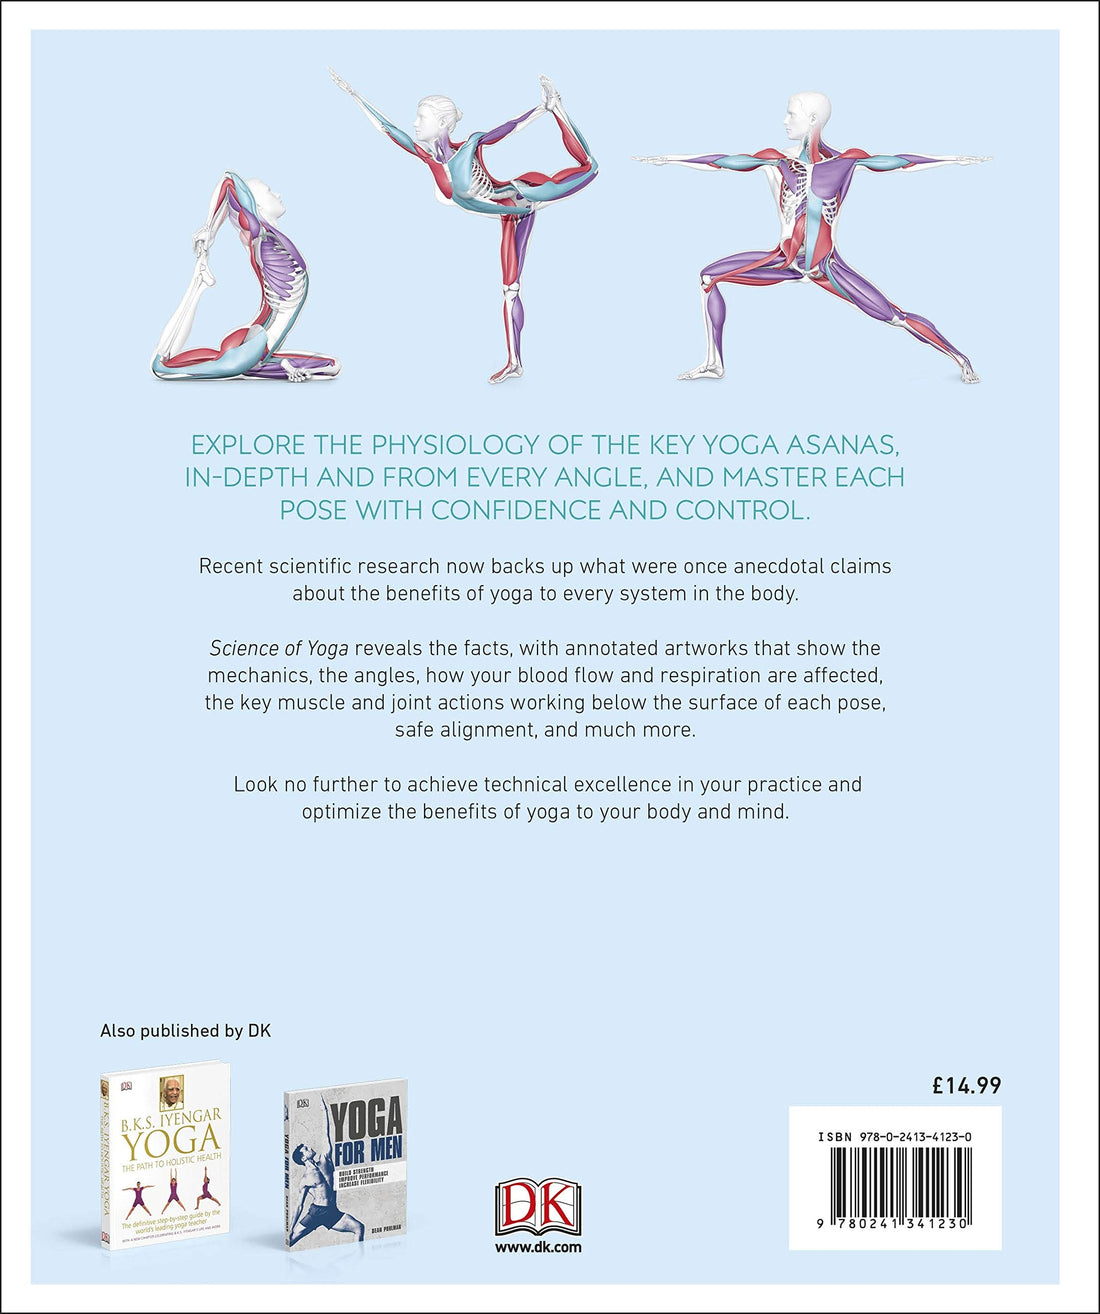 Science of Yoga - Ann Swanson